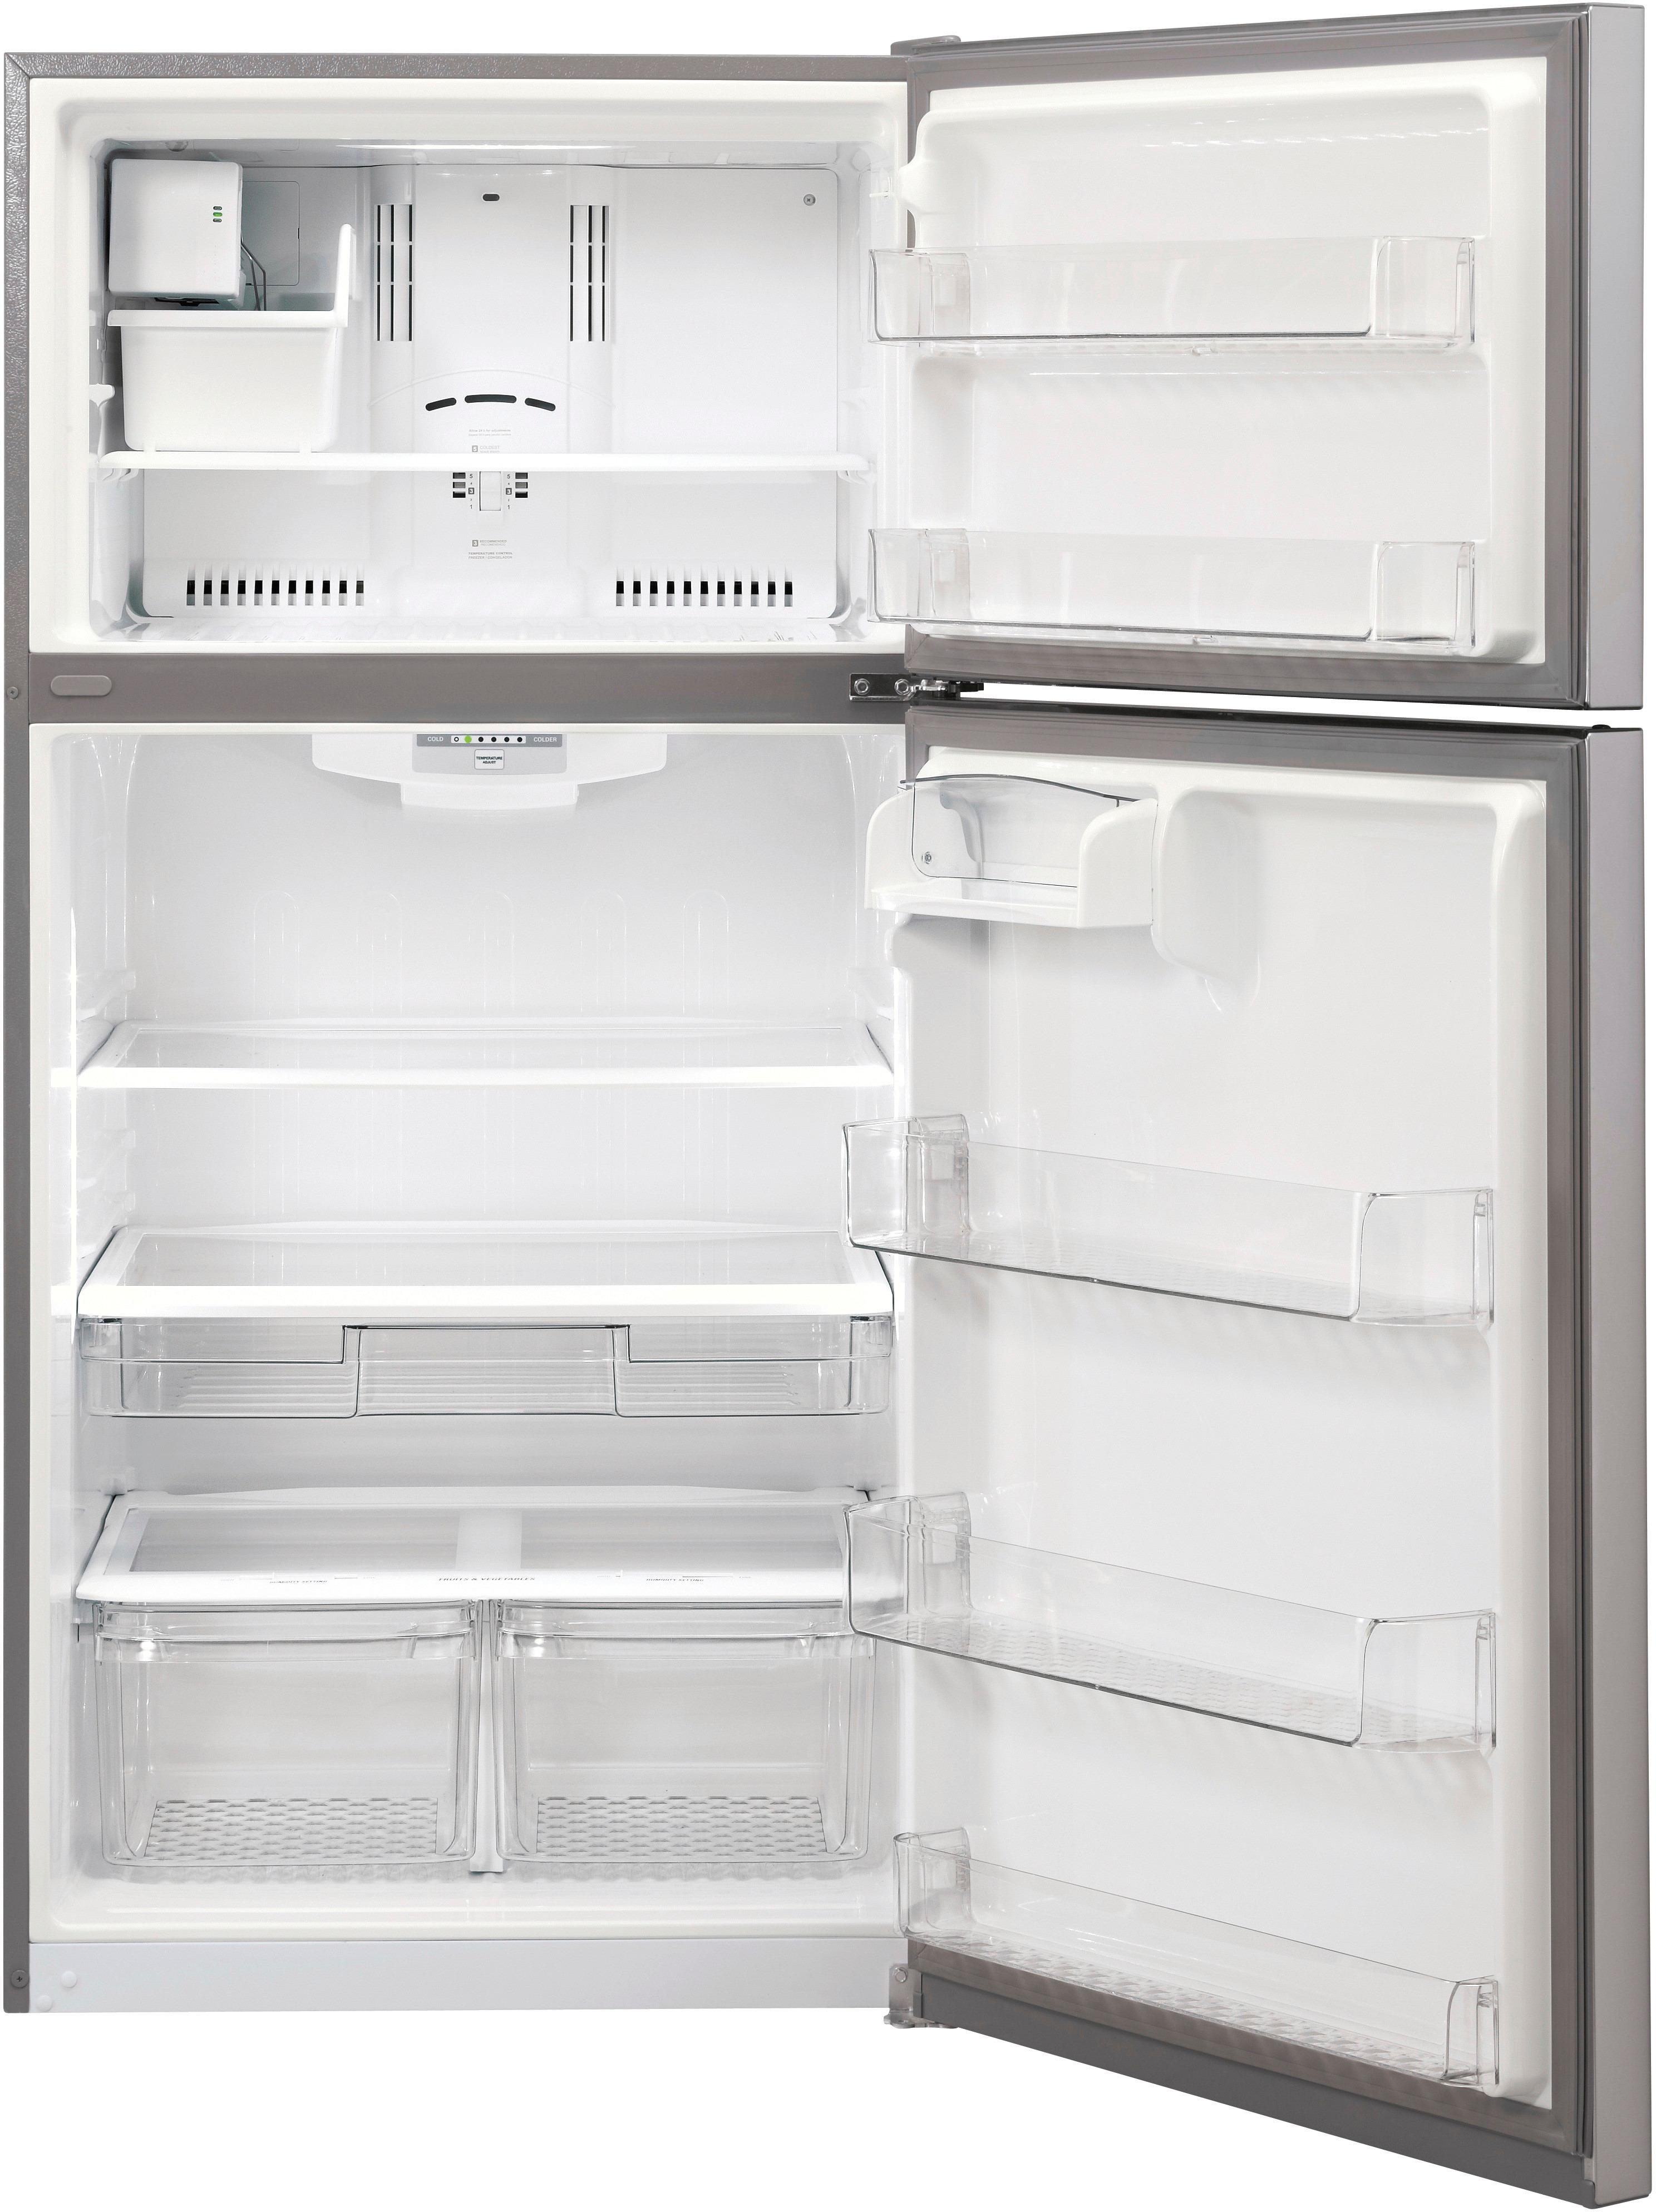 LG 20.2 Cu. Ft. TopFreezer Refrigerator Stainless steel LTCS20220S